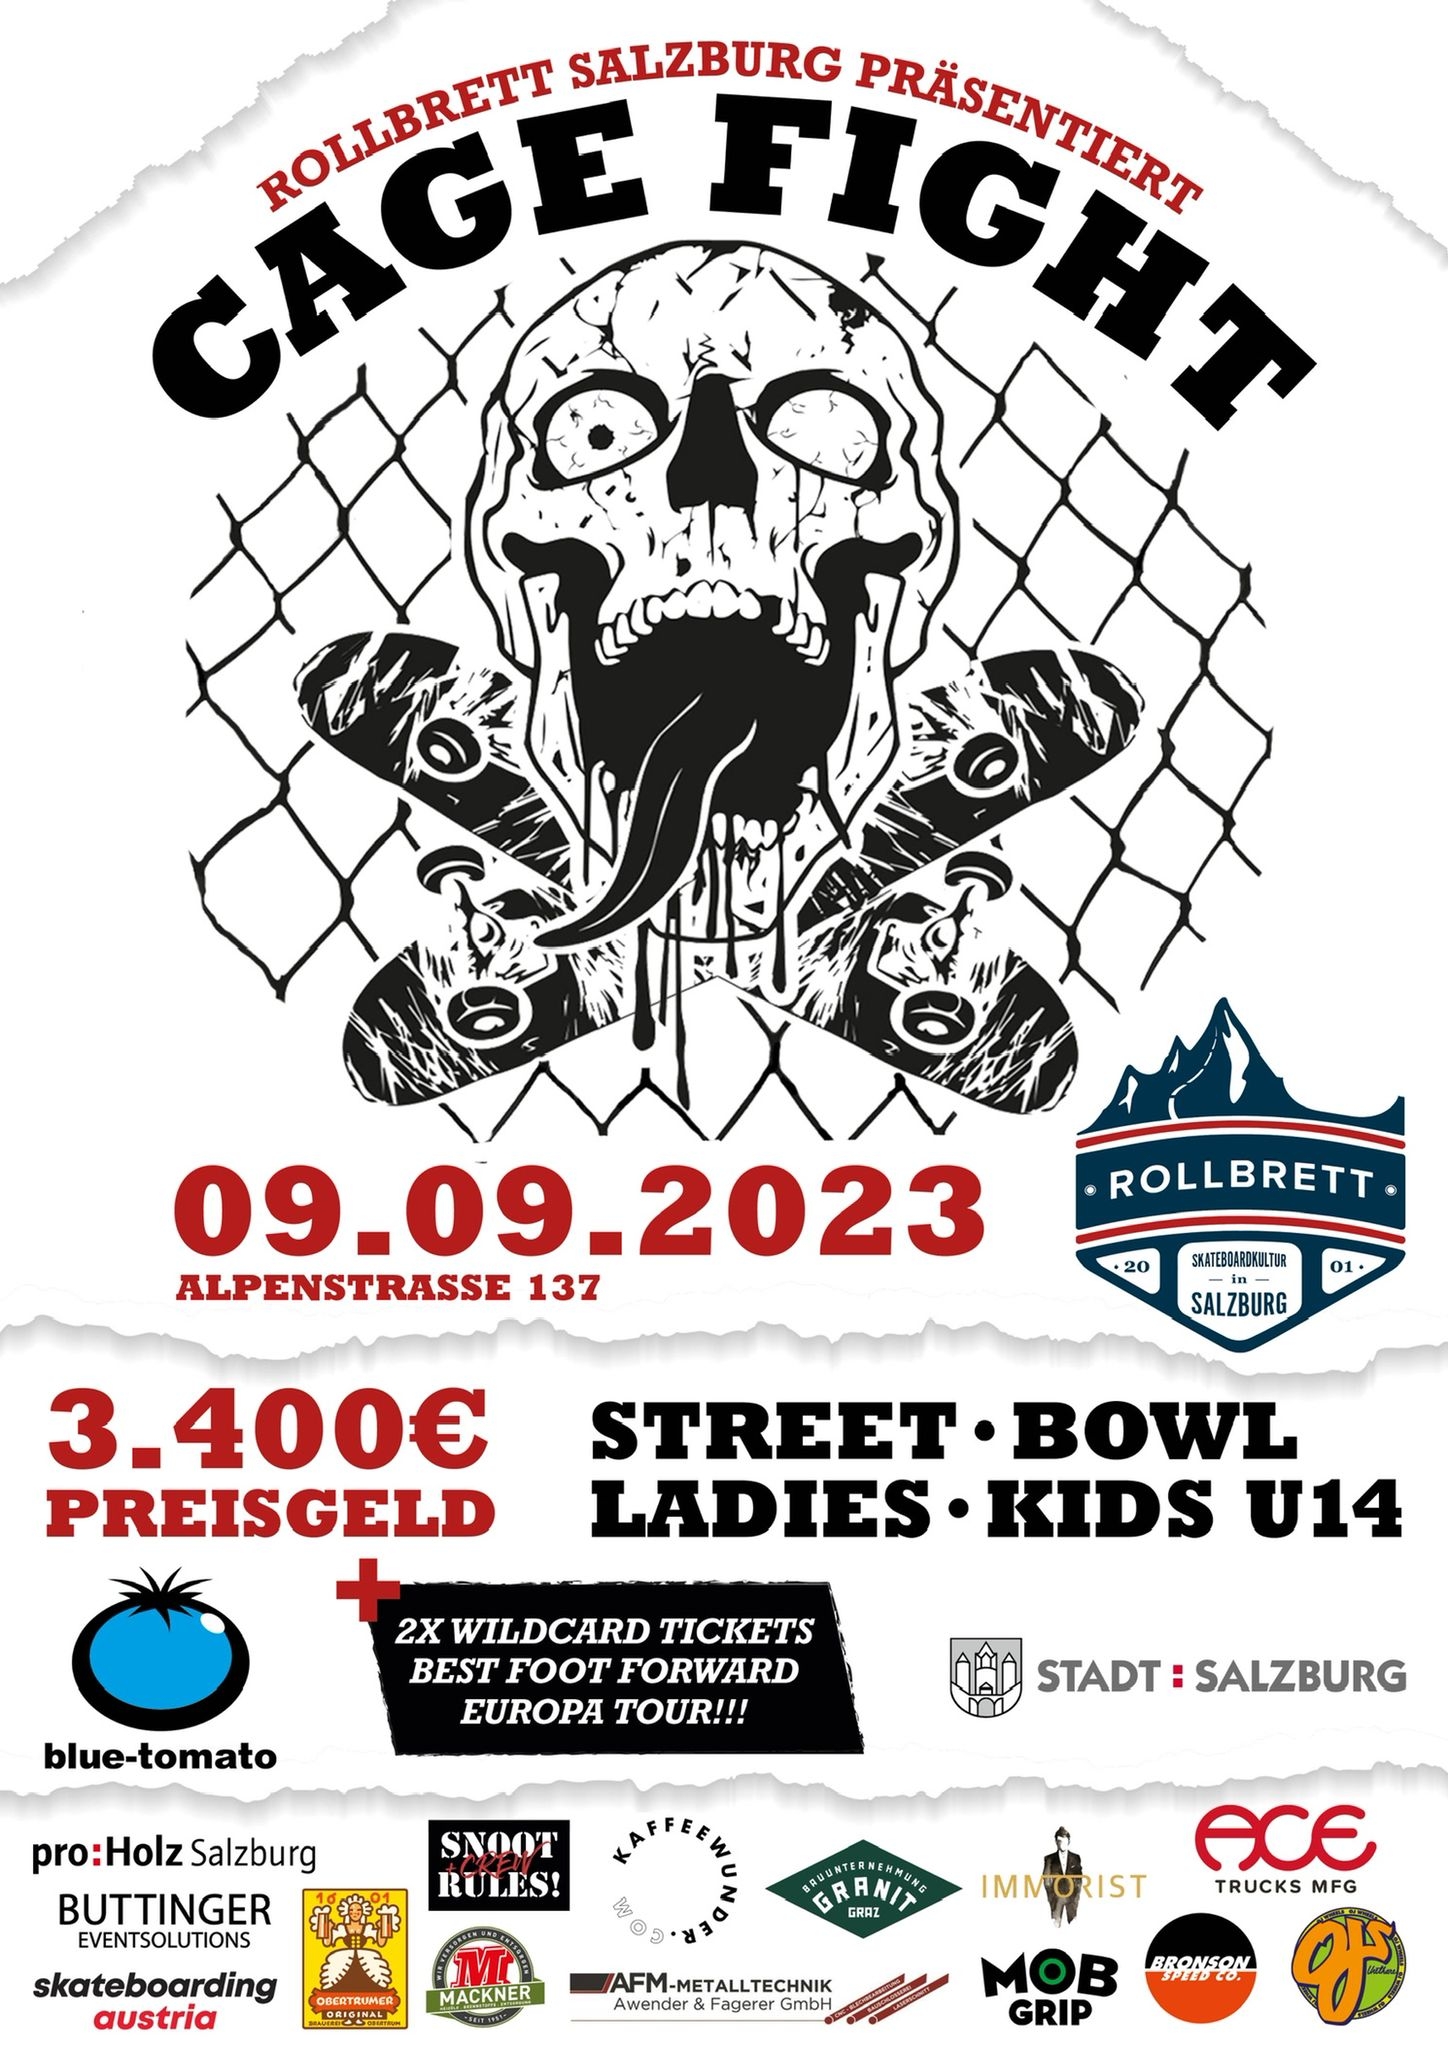 Cage Fight Skateboardcontest 2023 am 9. September 2023 @ The Cage Skatepark.